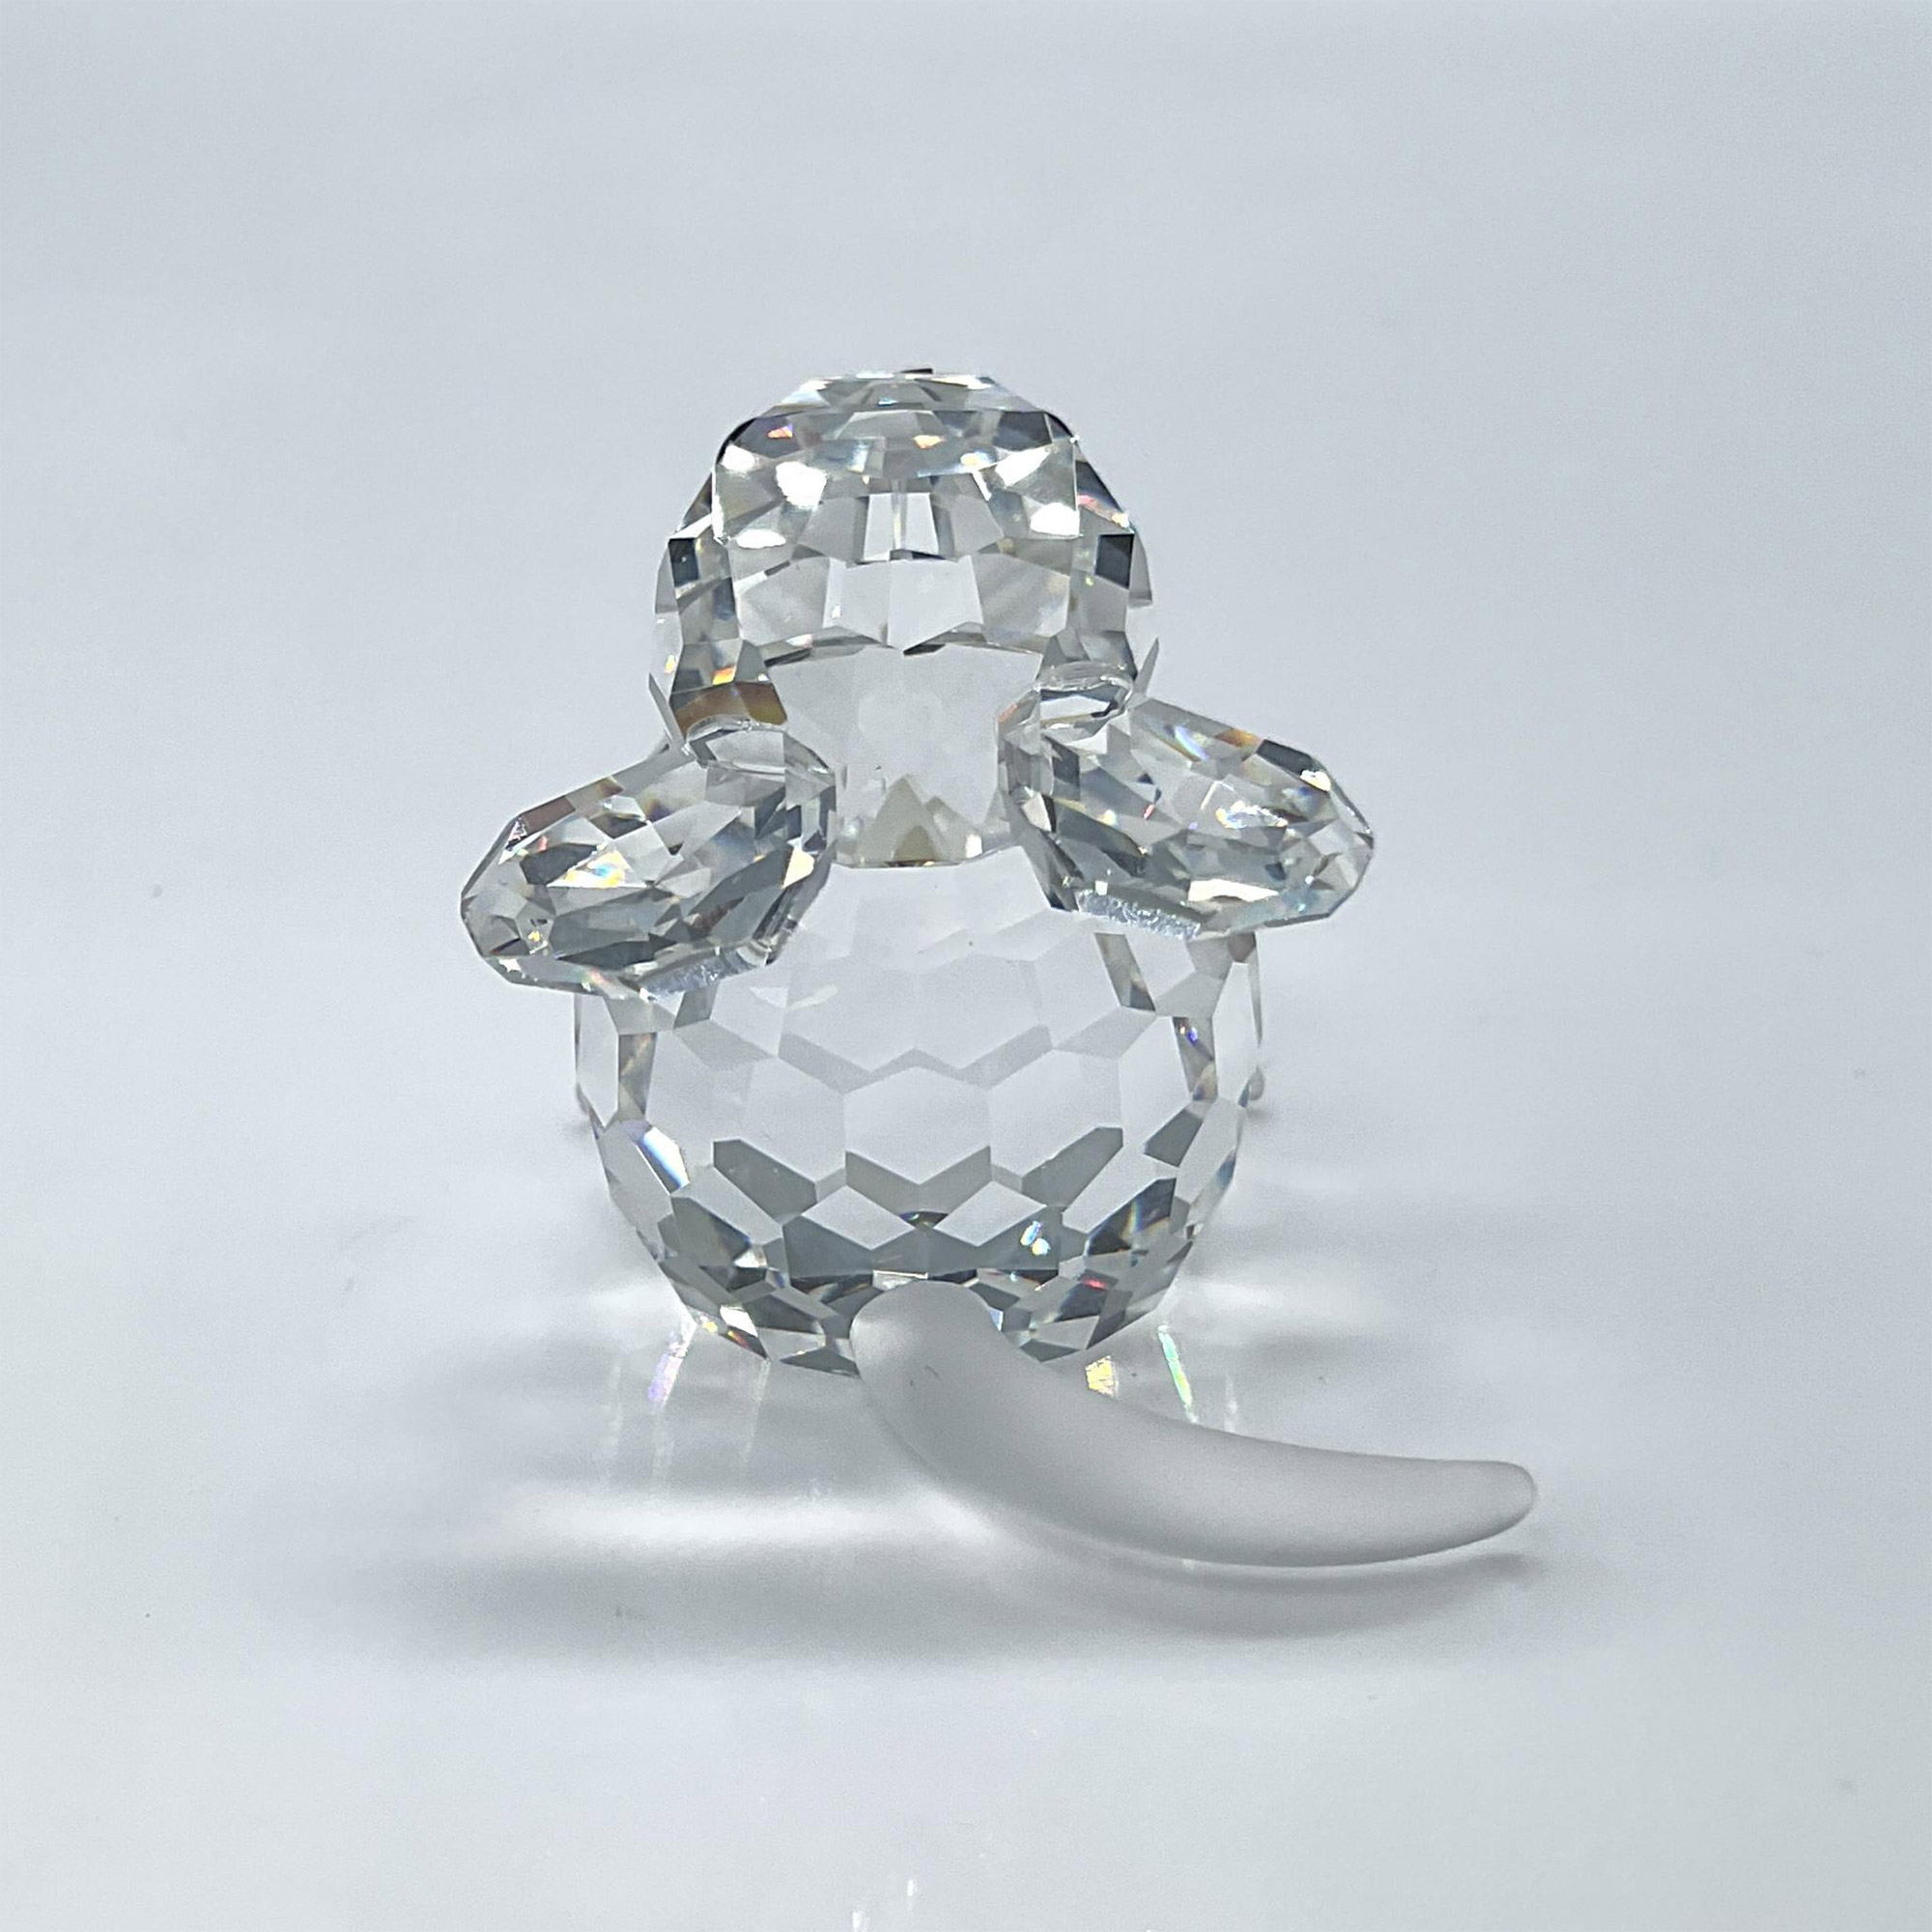 Swarovski Crystal Figurine, Field Mouse 162886 - Image 2 of 4